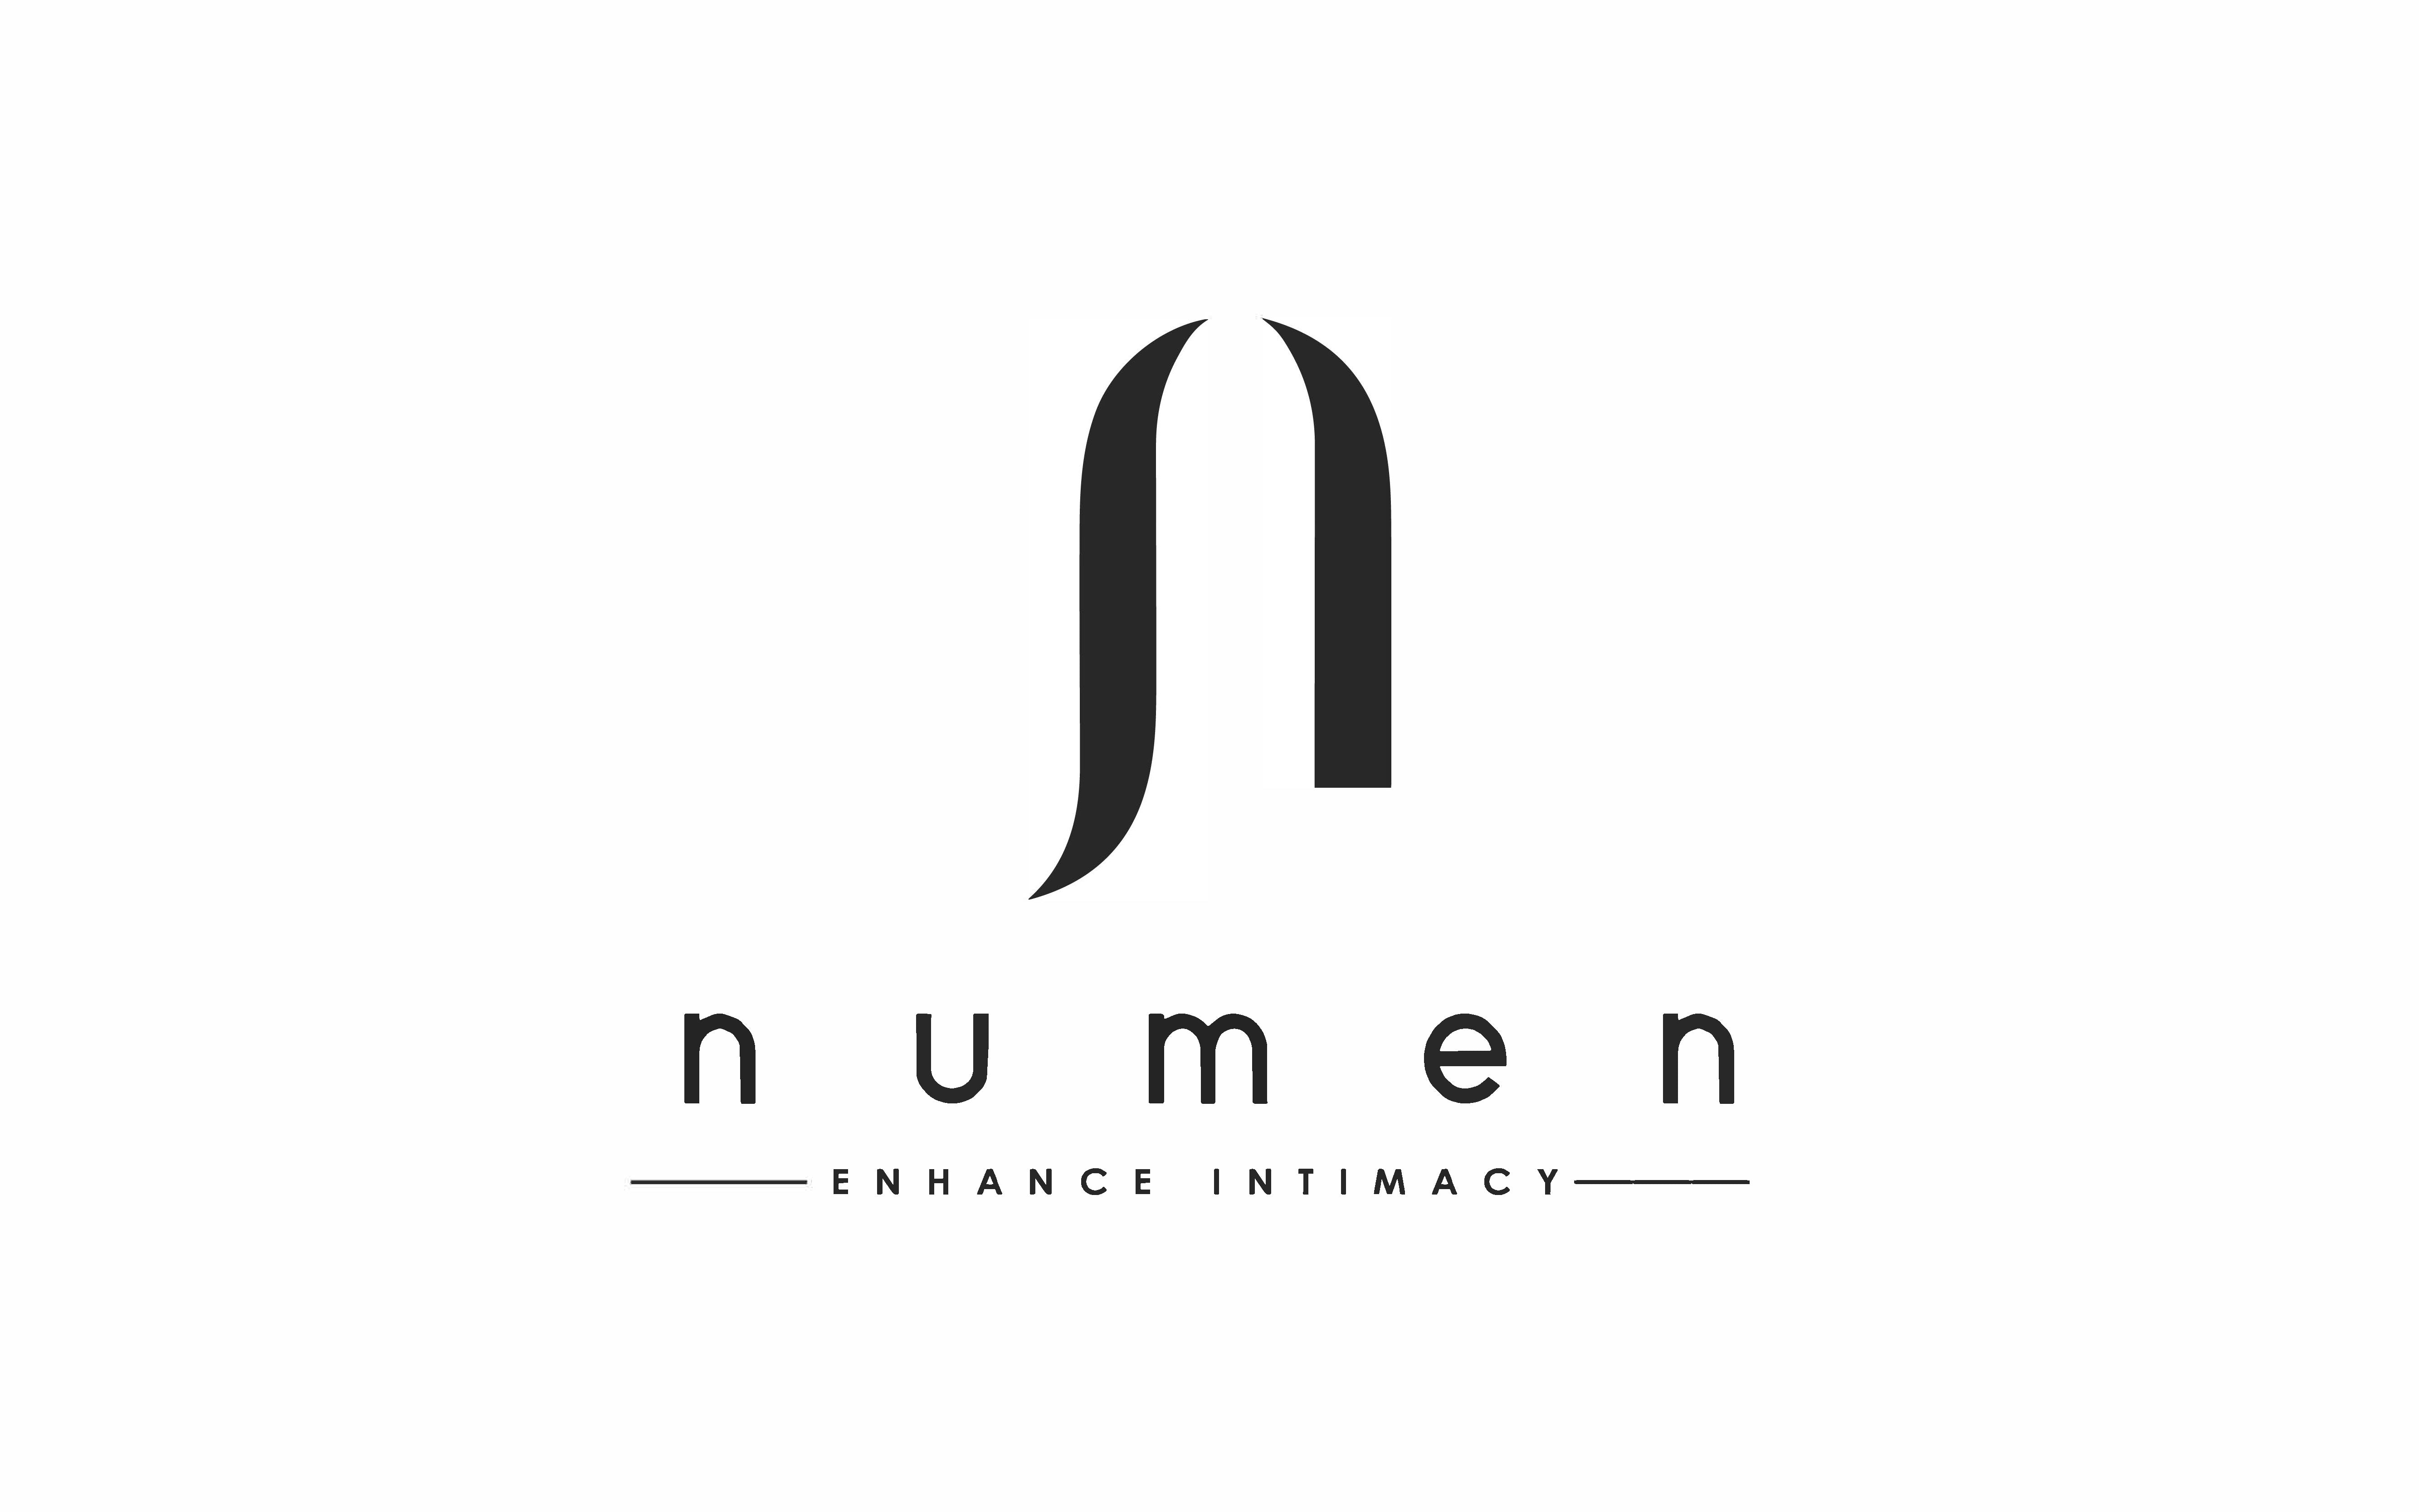 numen wellness enhance intimacy logo 